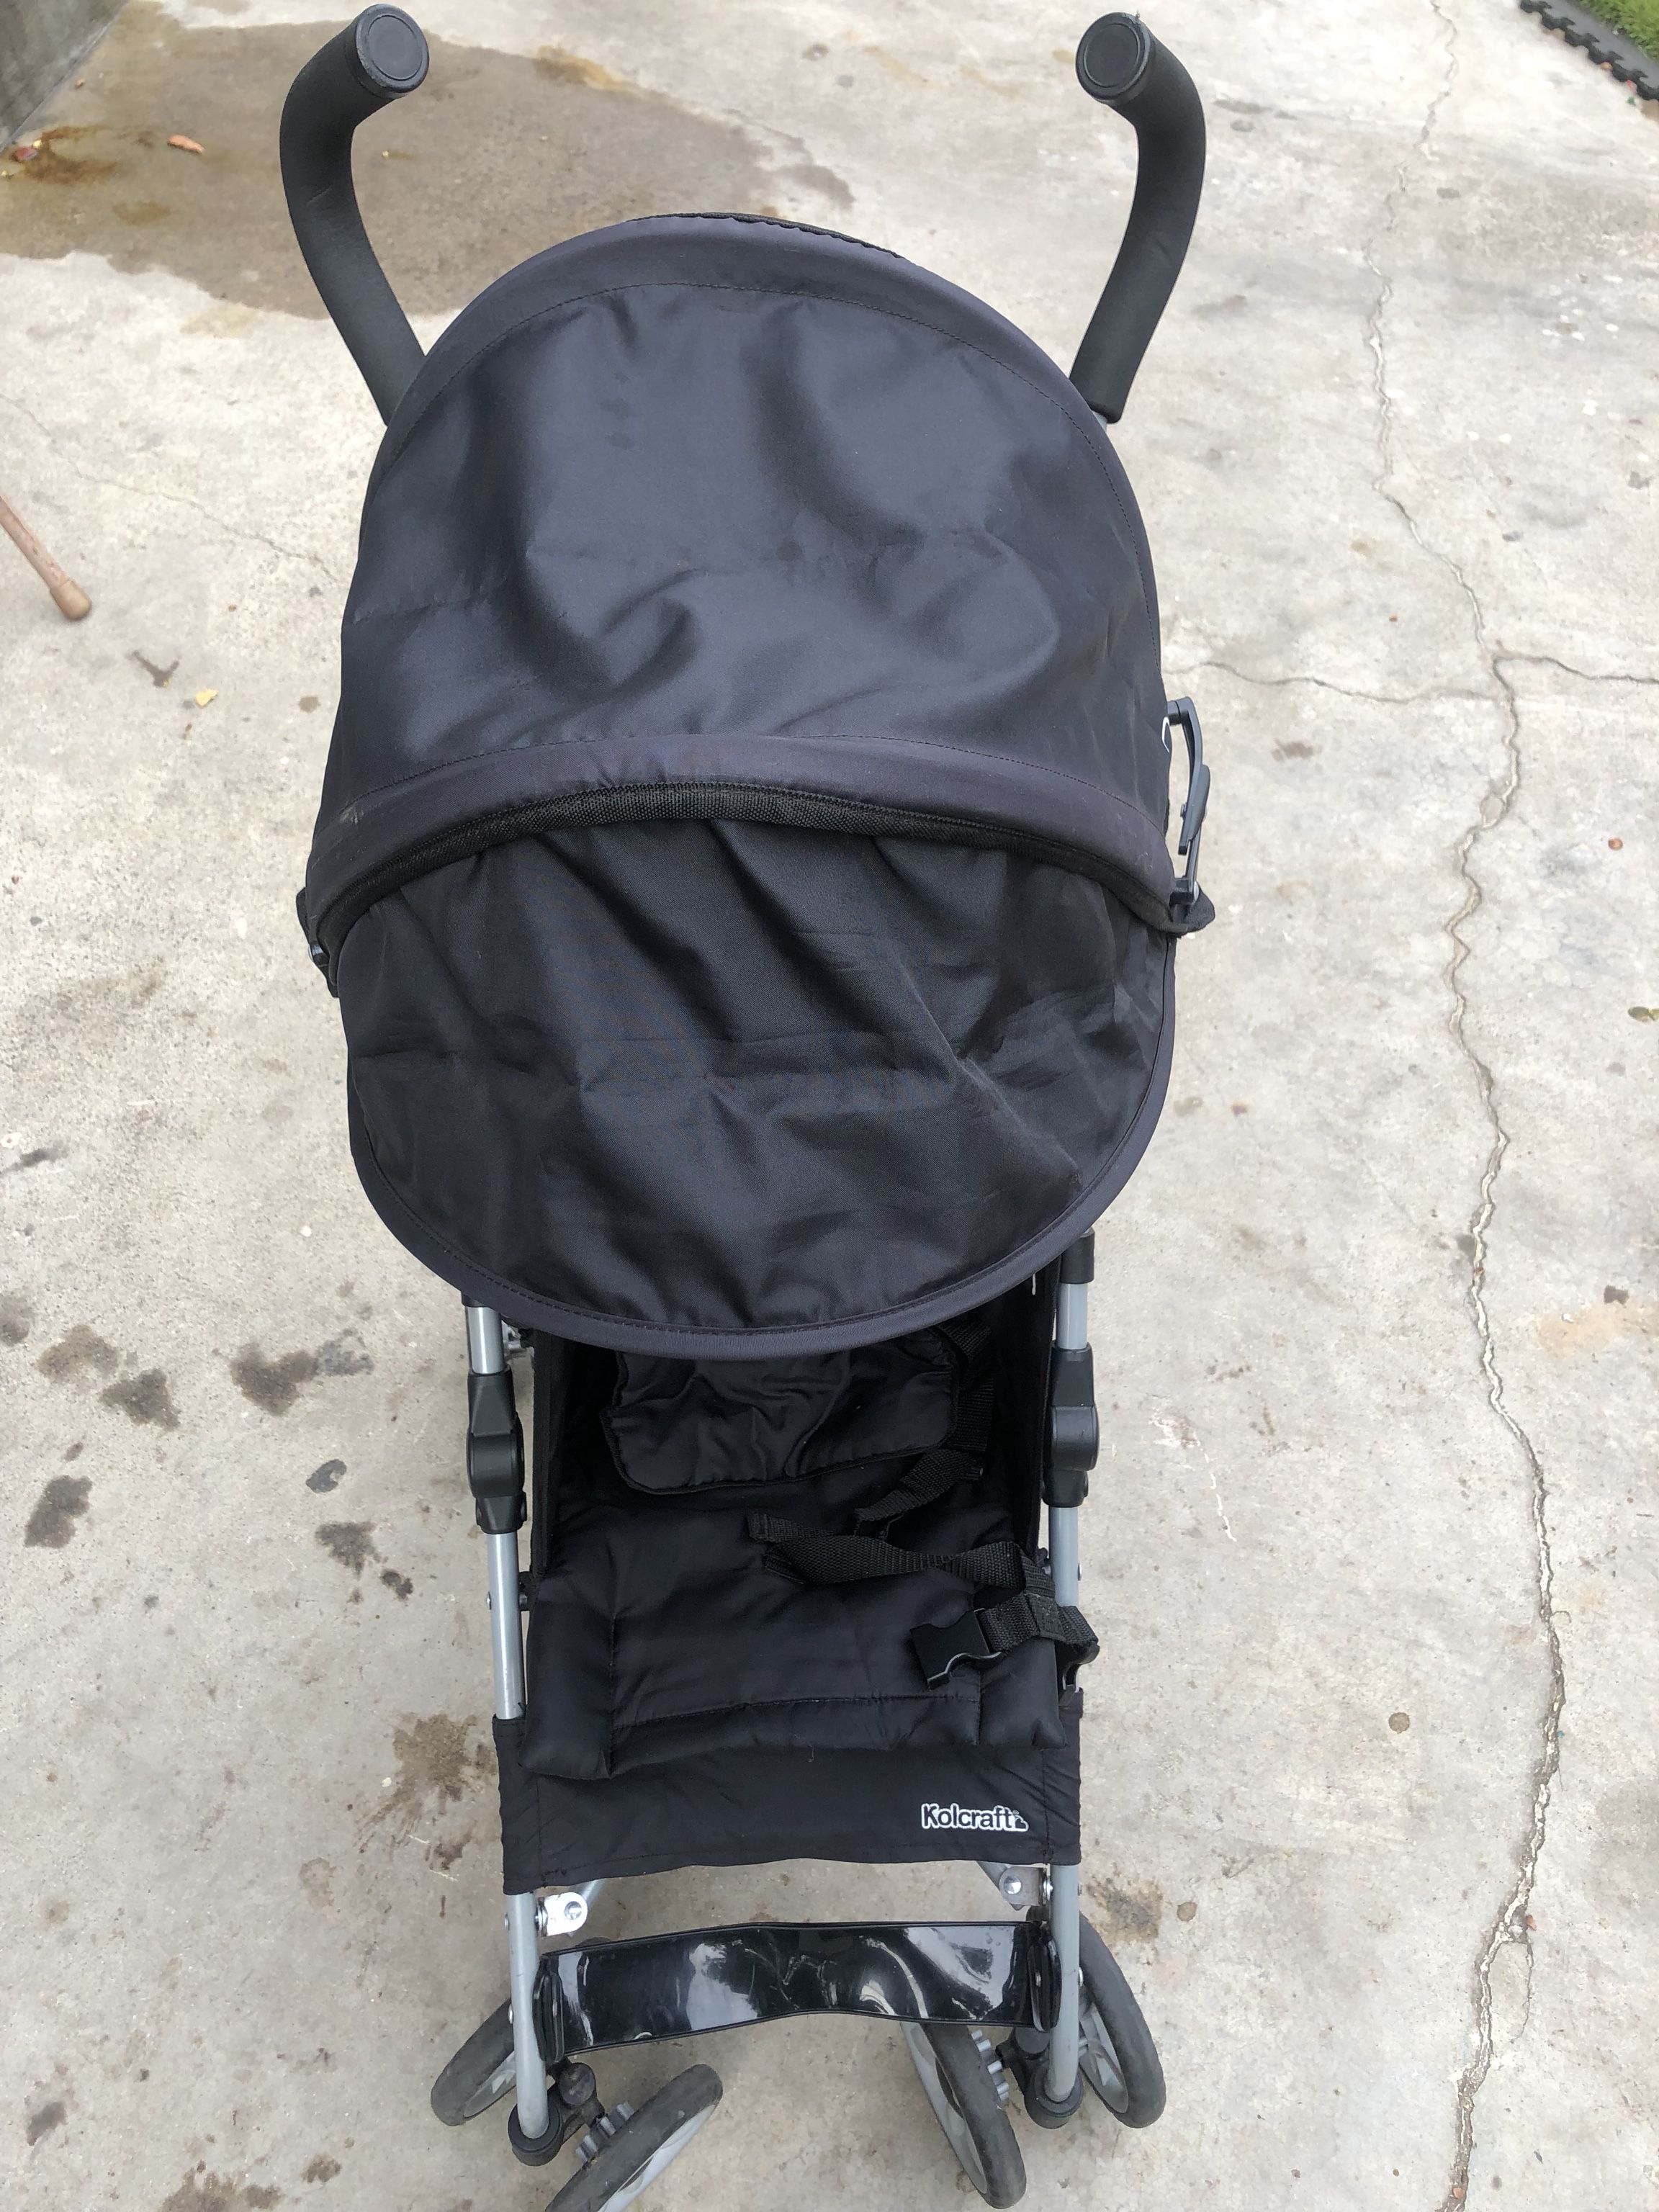 Kolcraft Baby Stroller